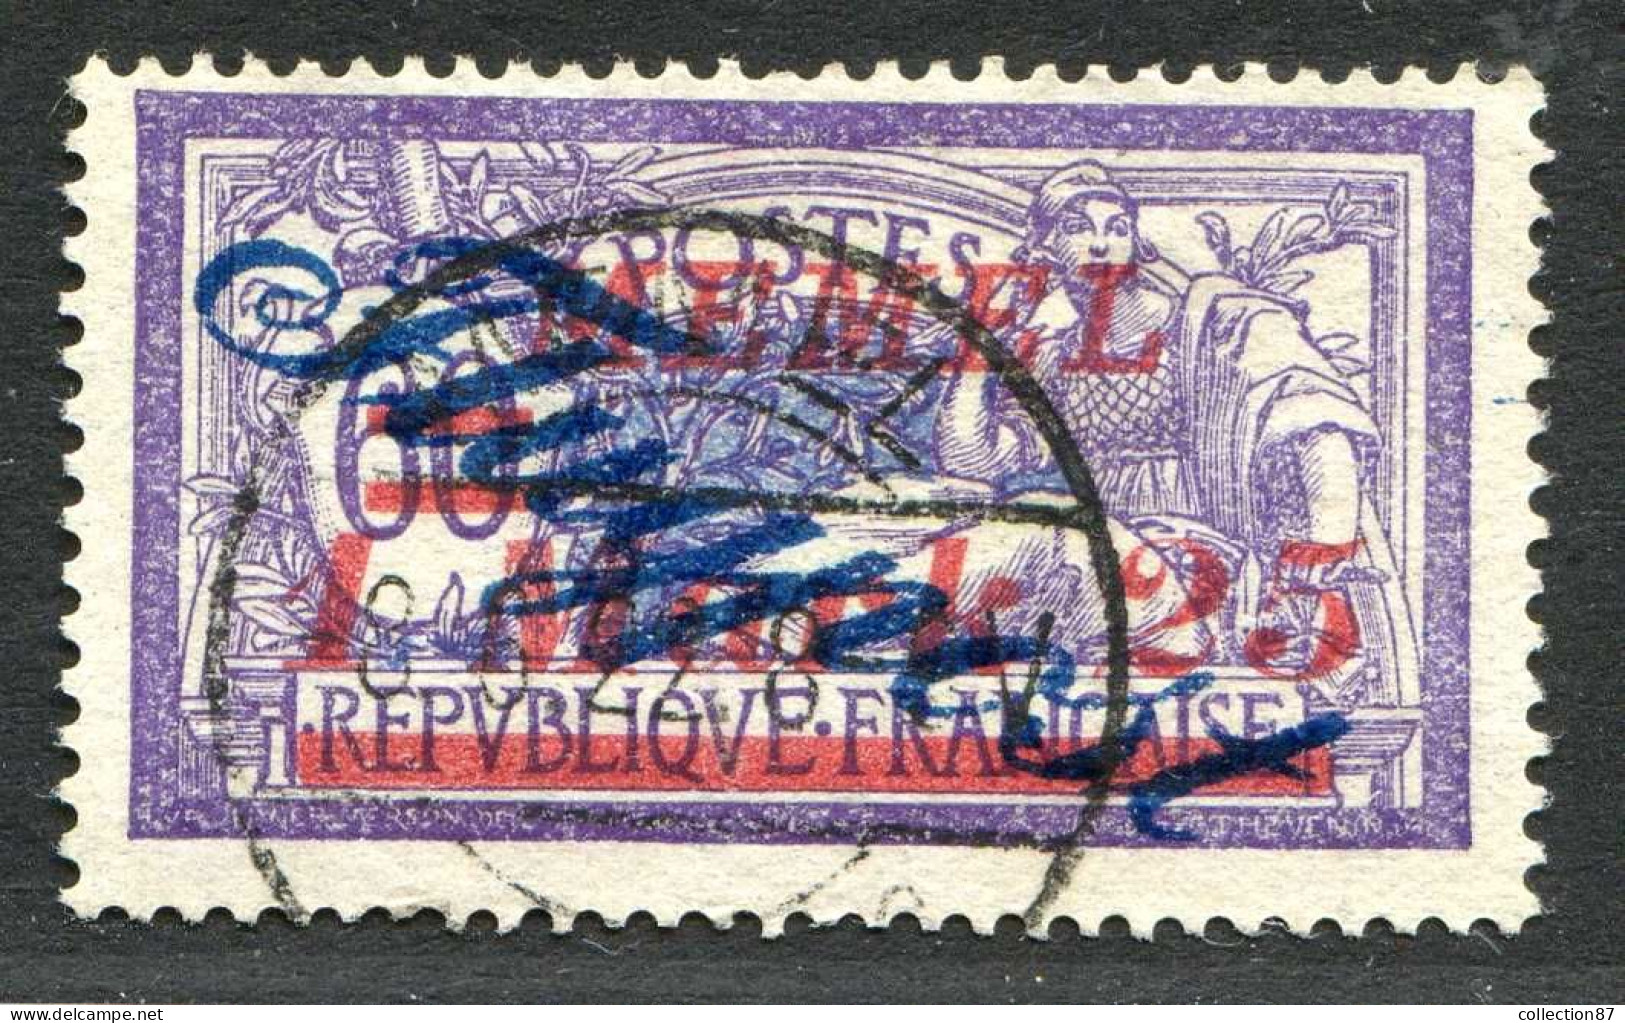 REF 088 > MEMEL FLUGPOST < PA N° 11 Ø < Bien Oblitéré Dos Visible < Ø Used > Air Mail - Aéro - Used Stamps